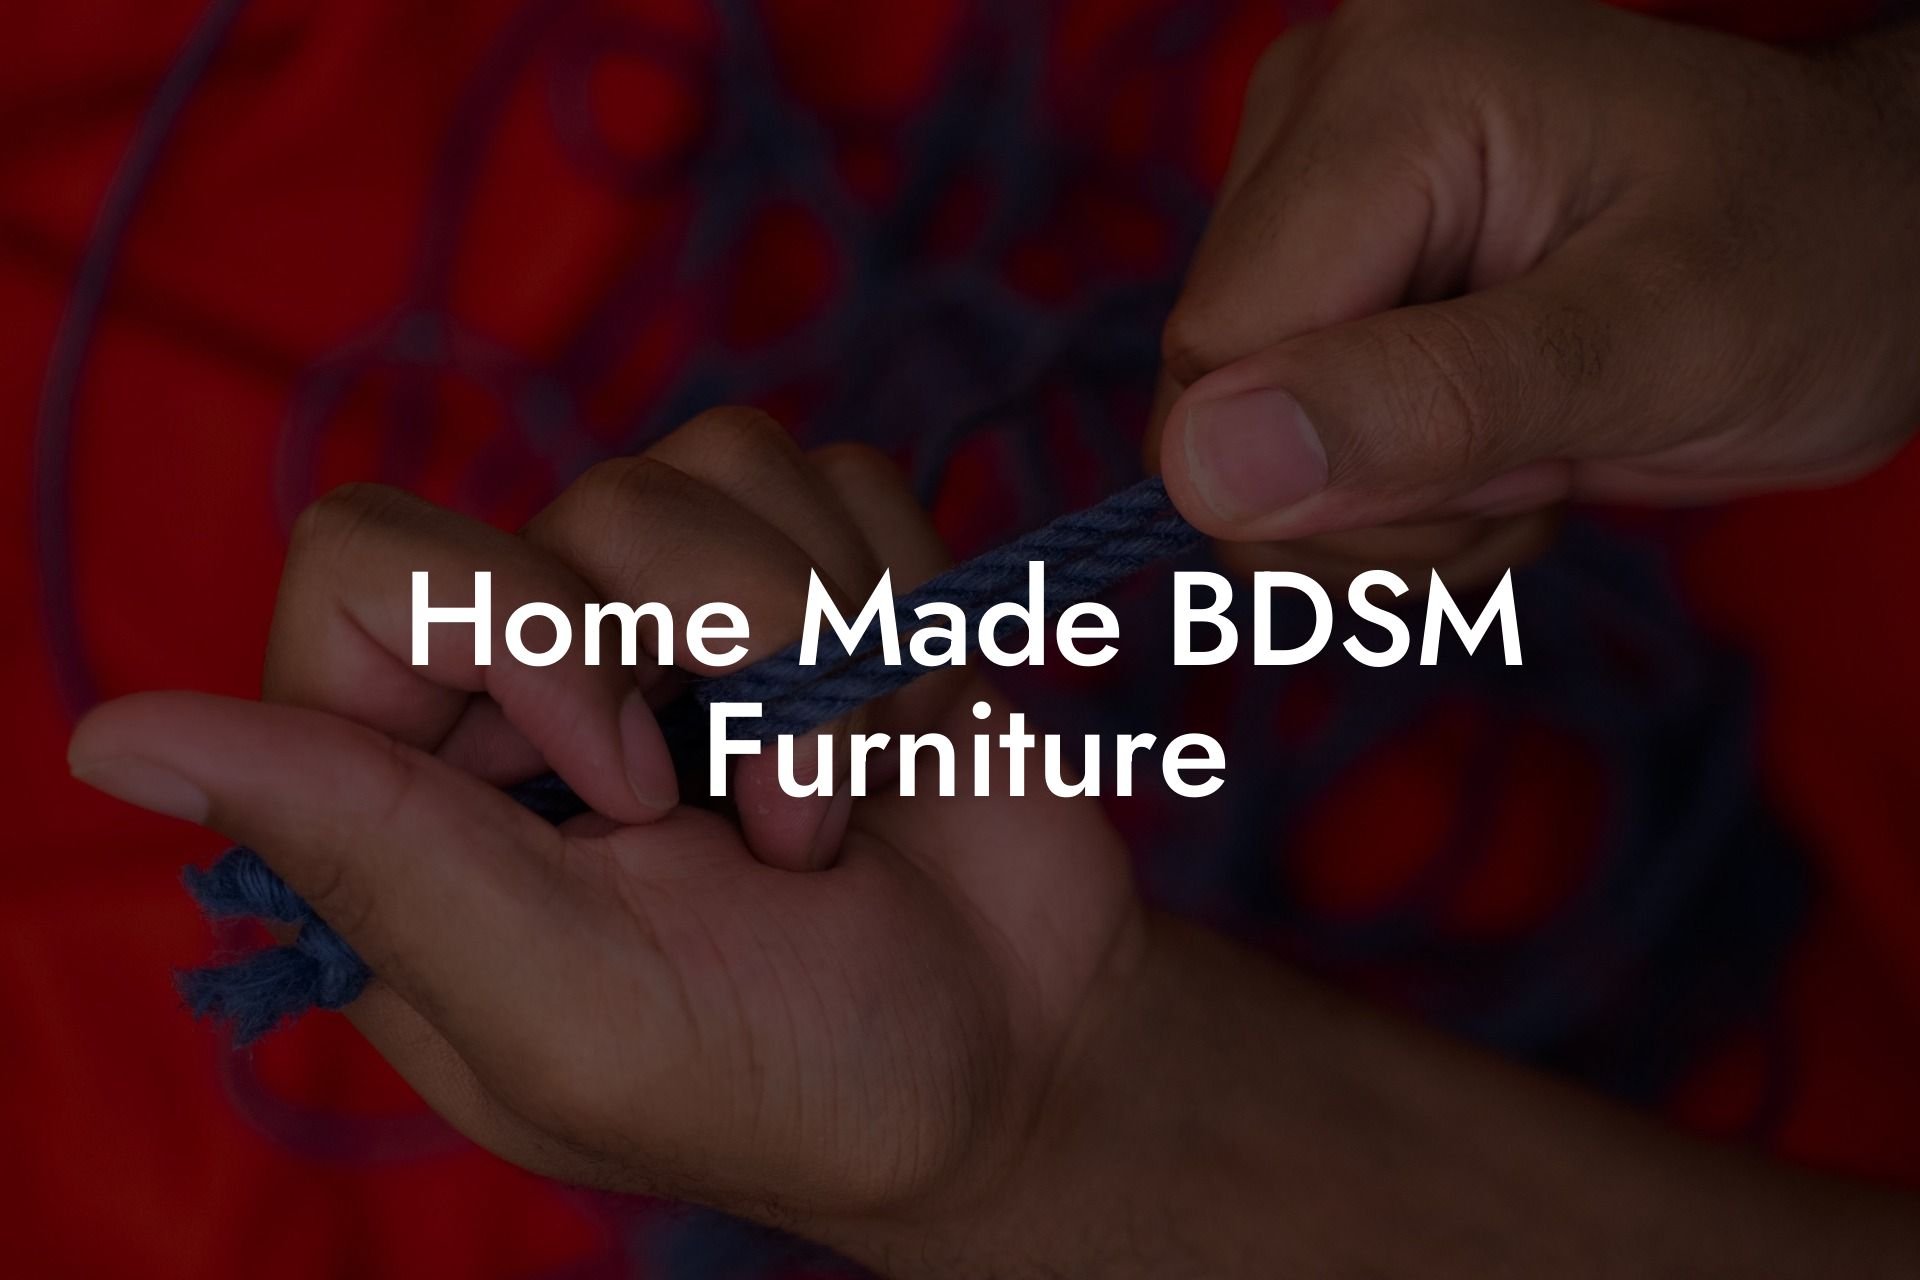 Home Made BDSM Furniture